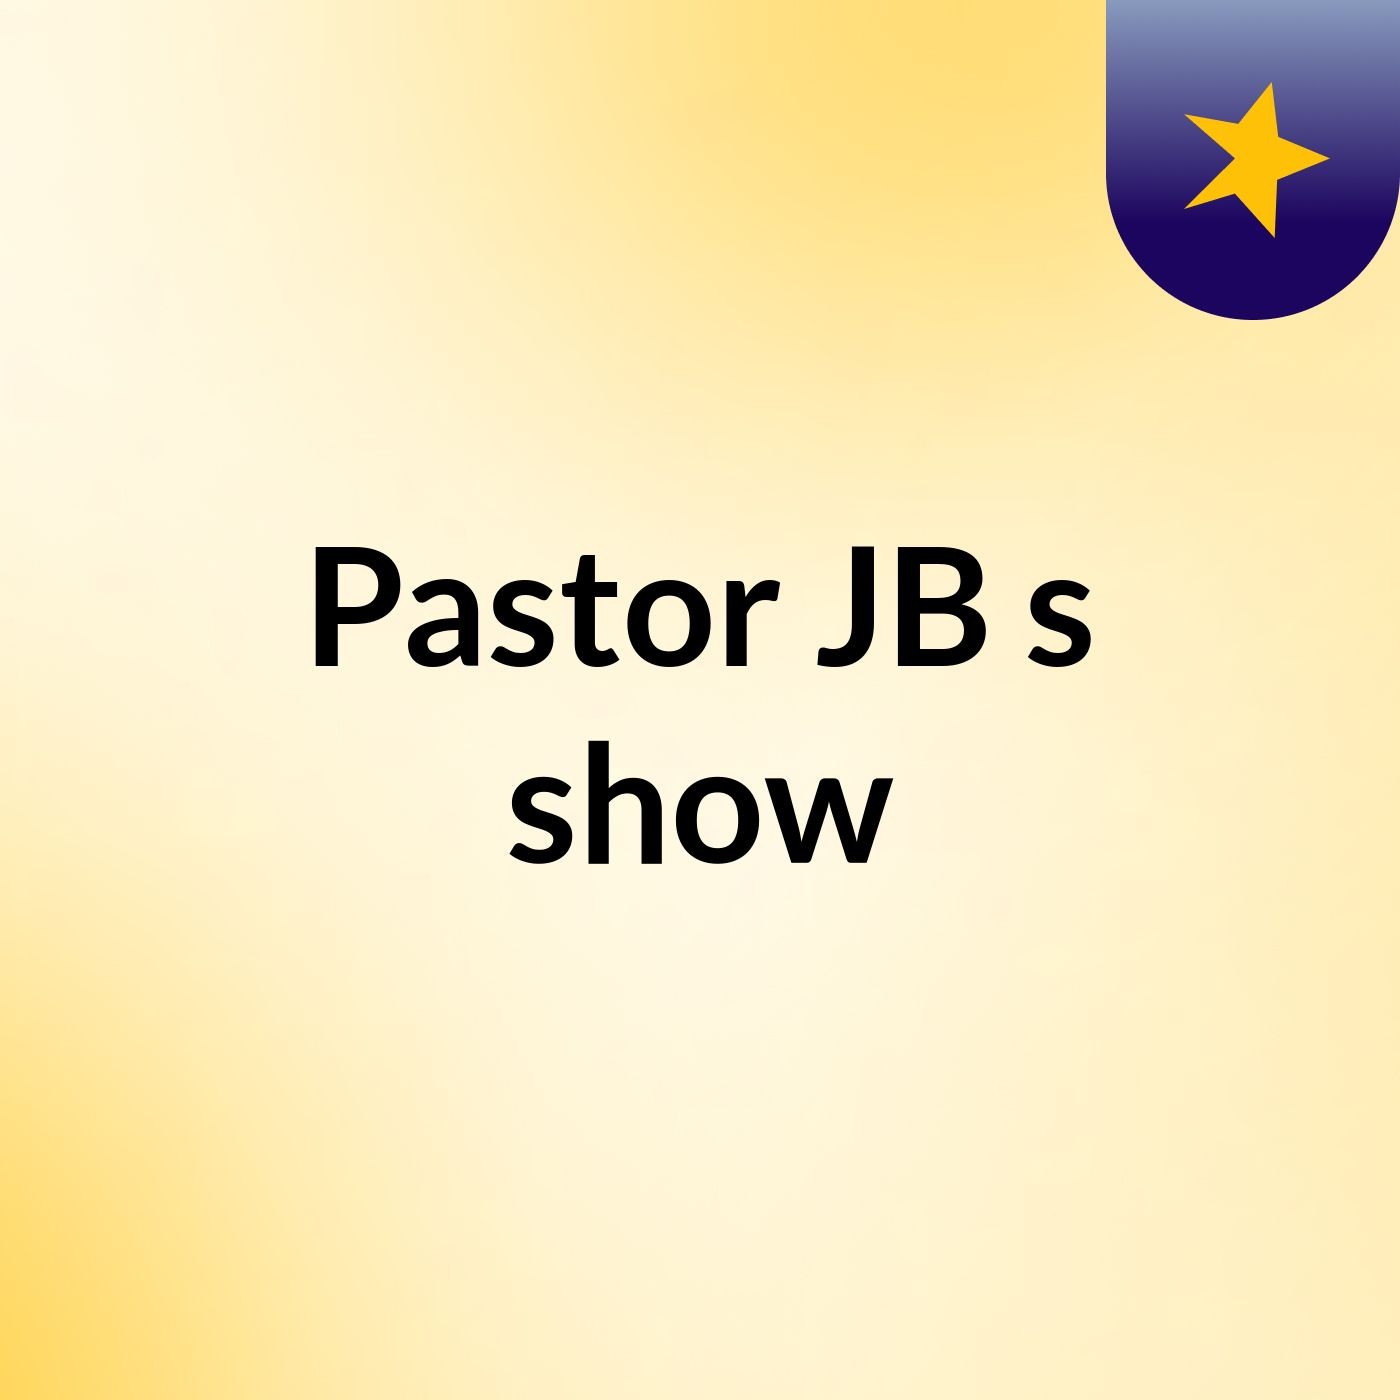 Pastor JB's show